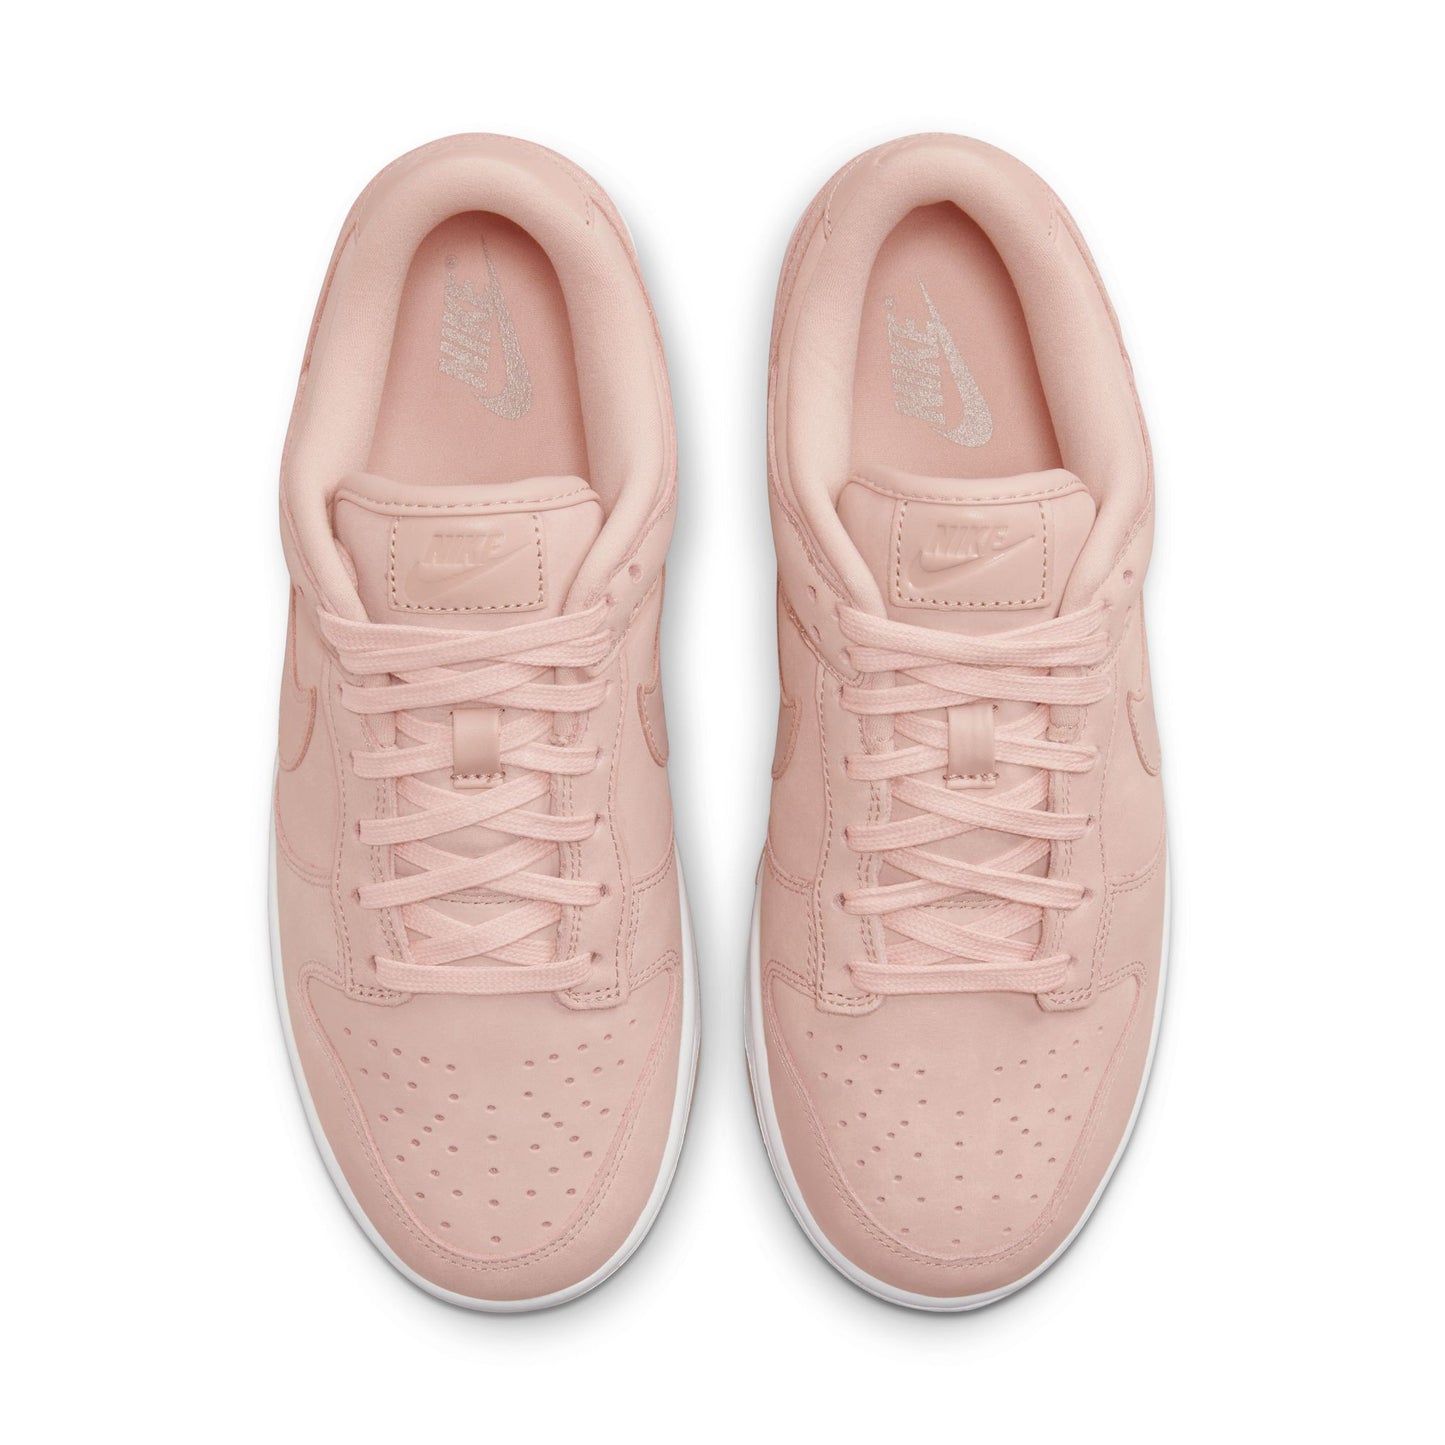 W Nike Dunk Low Premium MF "Pink Oxford" - DV7415-600